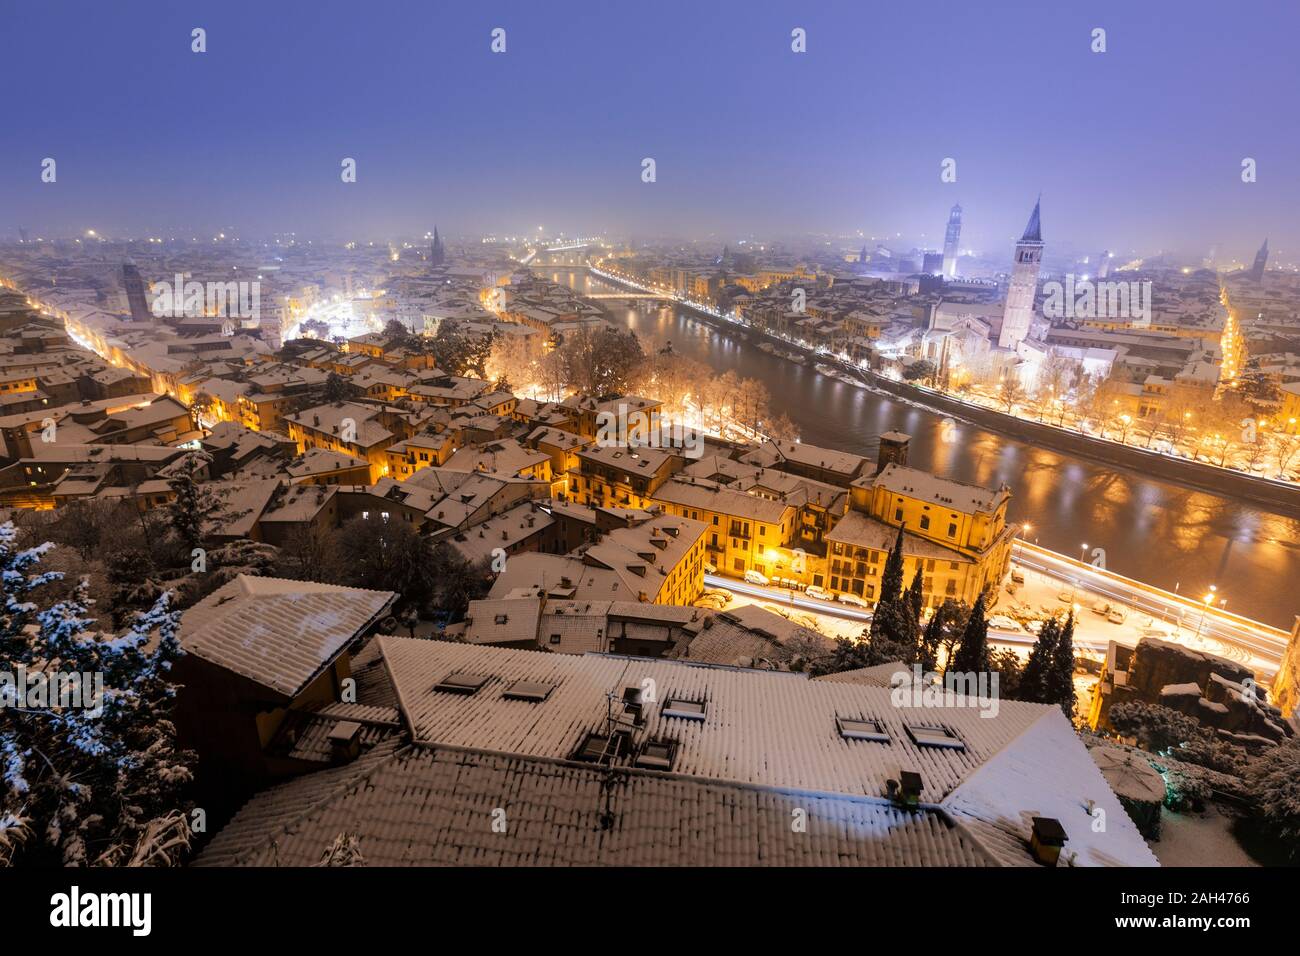 Italy, Verona, High angle view of city illuminated at night in Winter Stock Photo